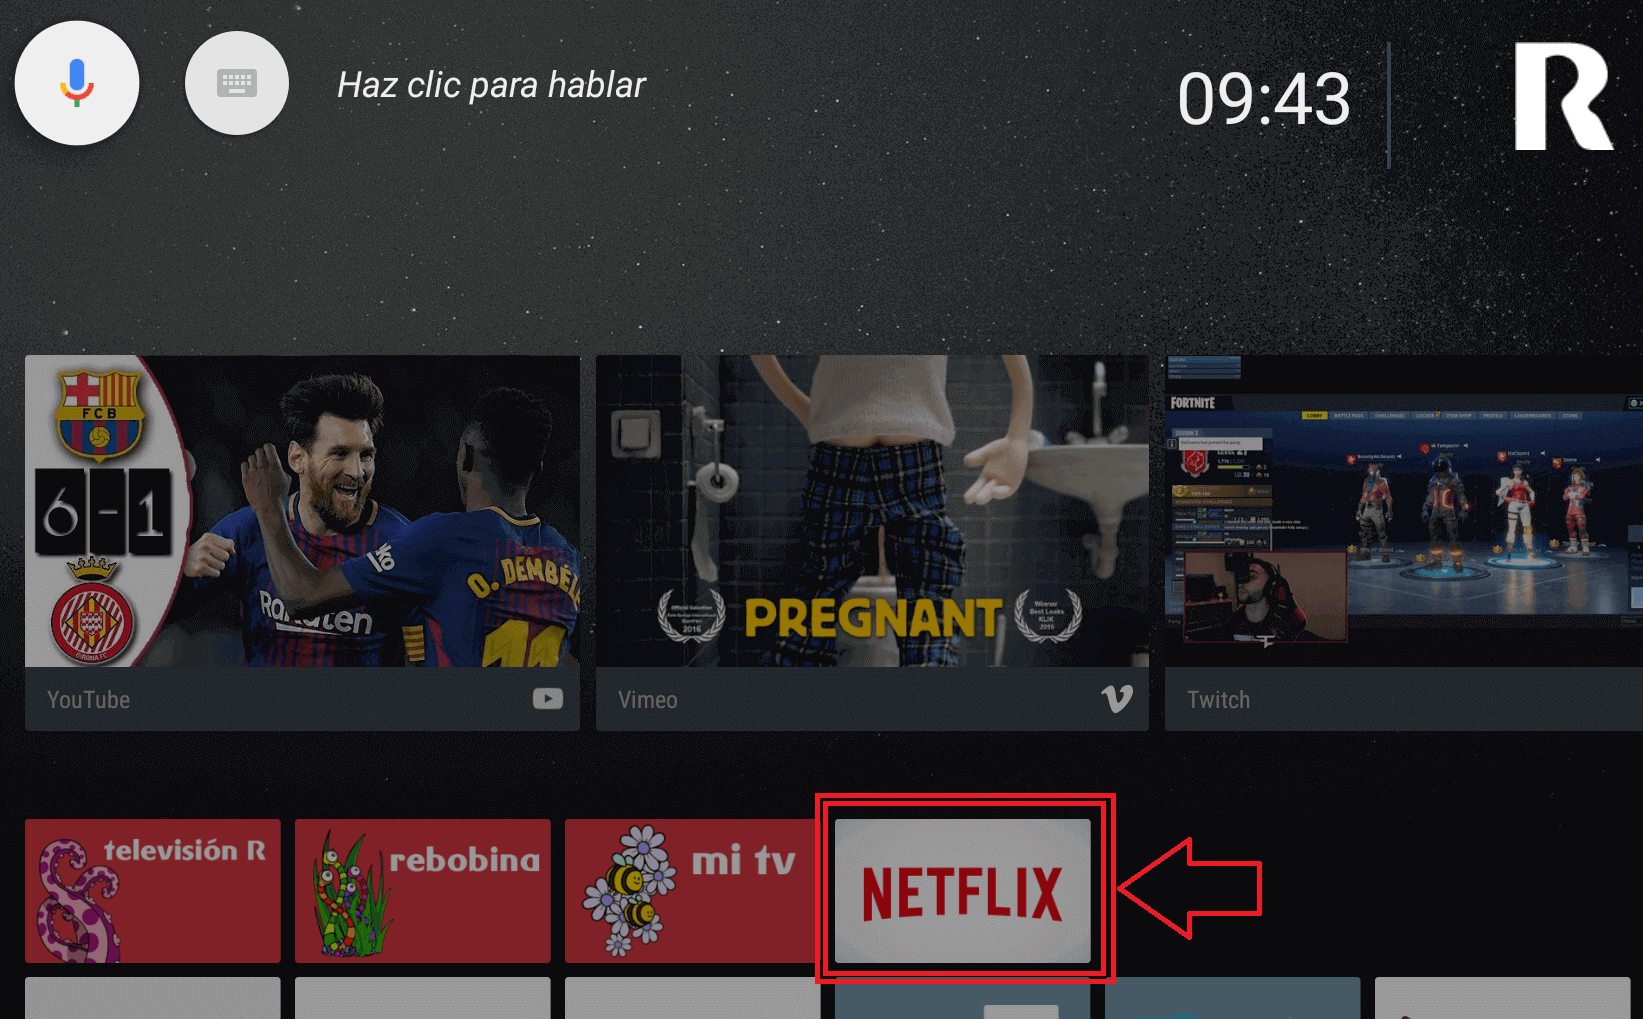 Netflix na televisión de R